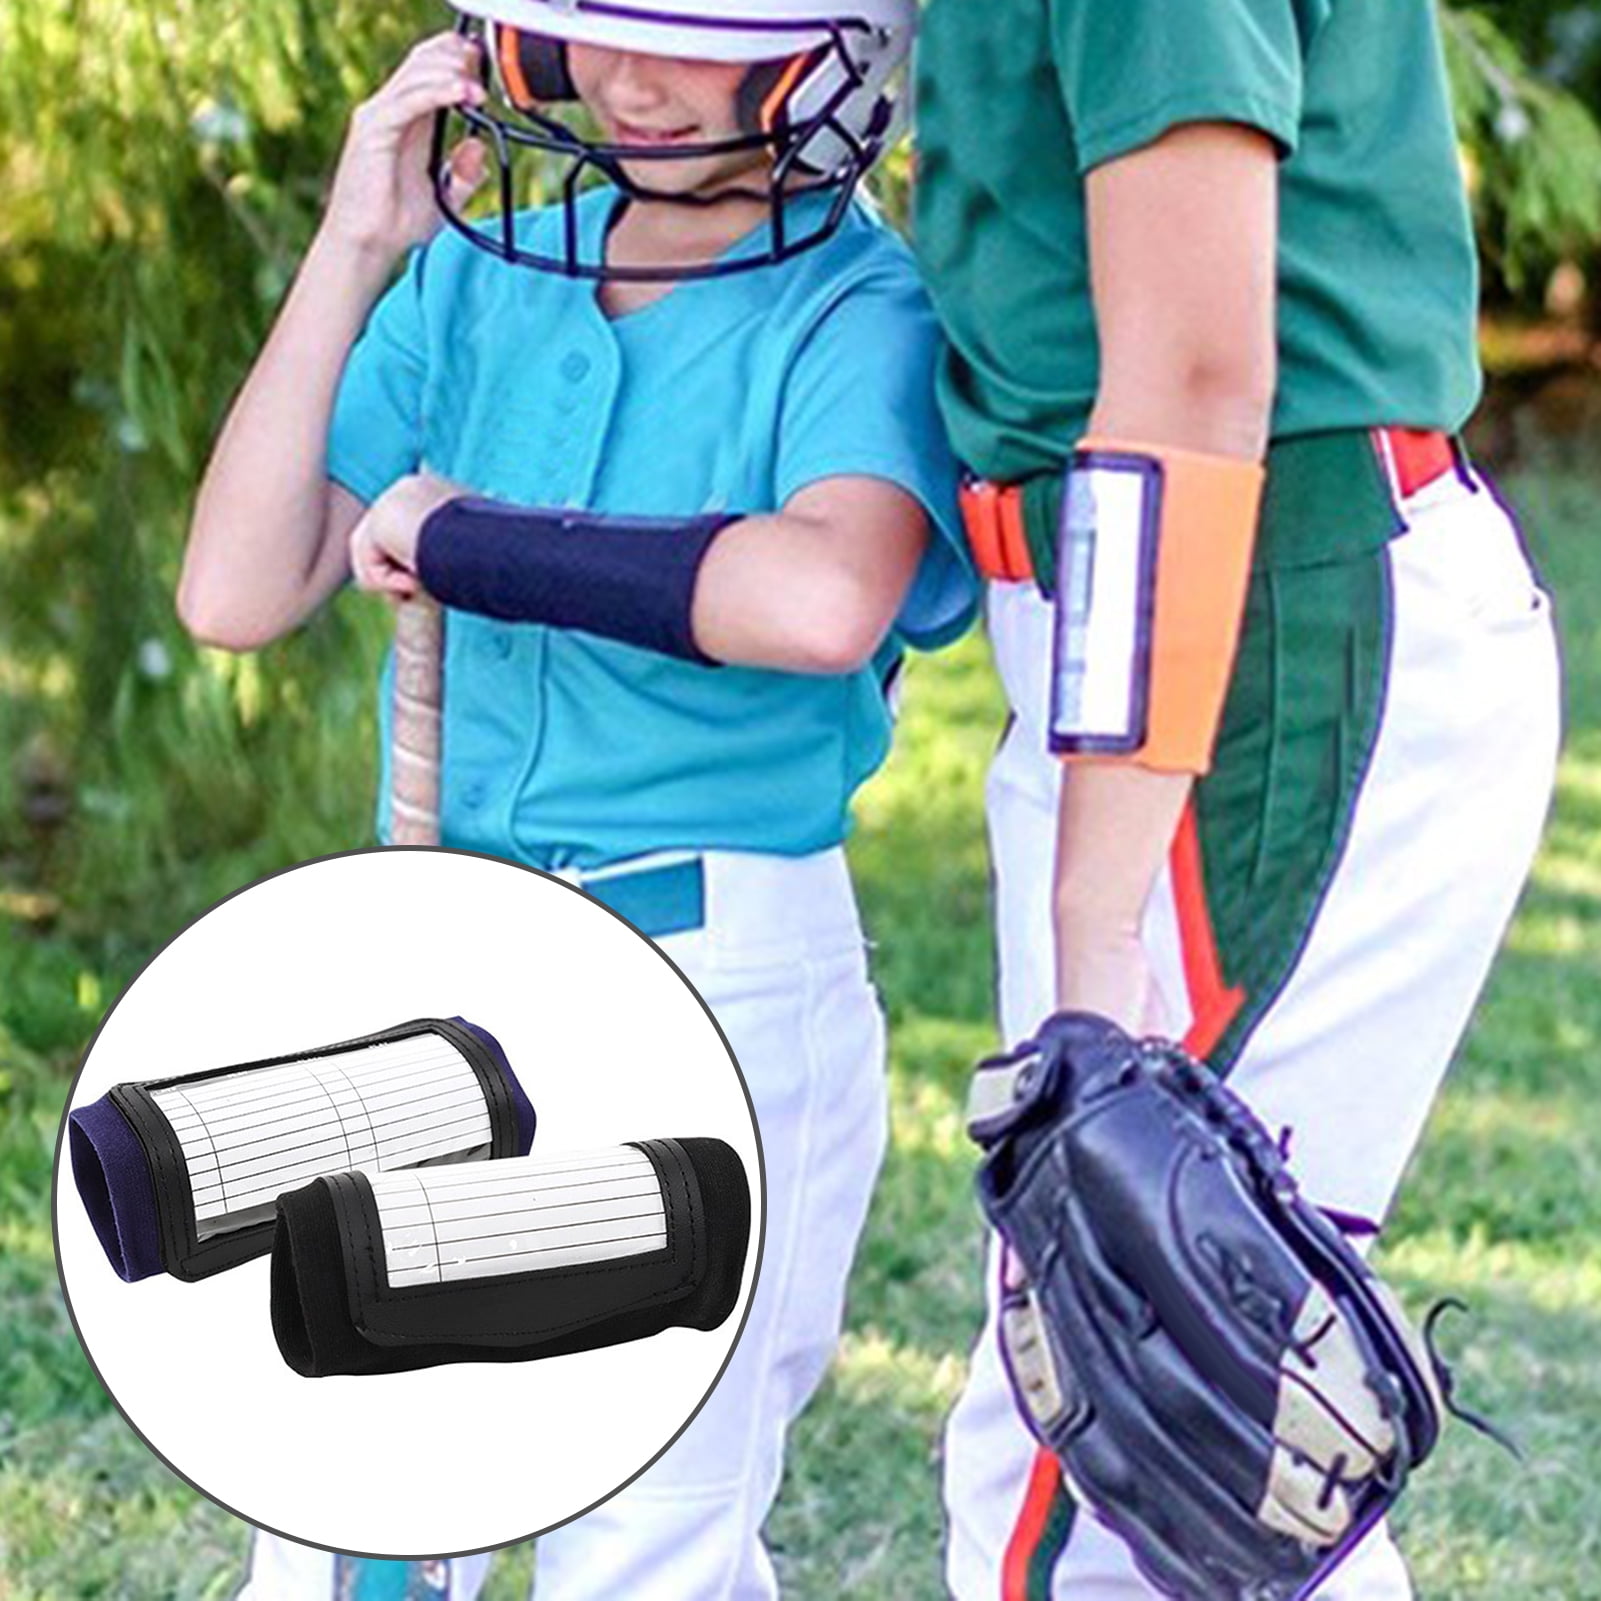  Softball Wristbands for Signs - Single Window Adult Size 20  Pack - Football Quarterback (QB) Play Sheets - Baseball Armband Playbook -  (Black) : Sports & Outdoors